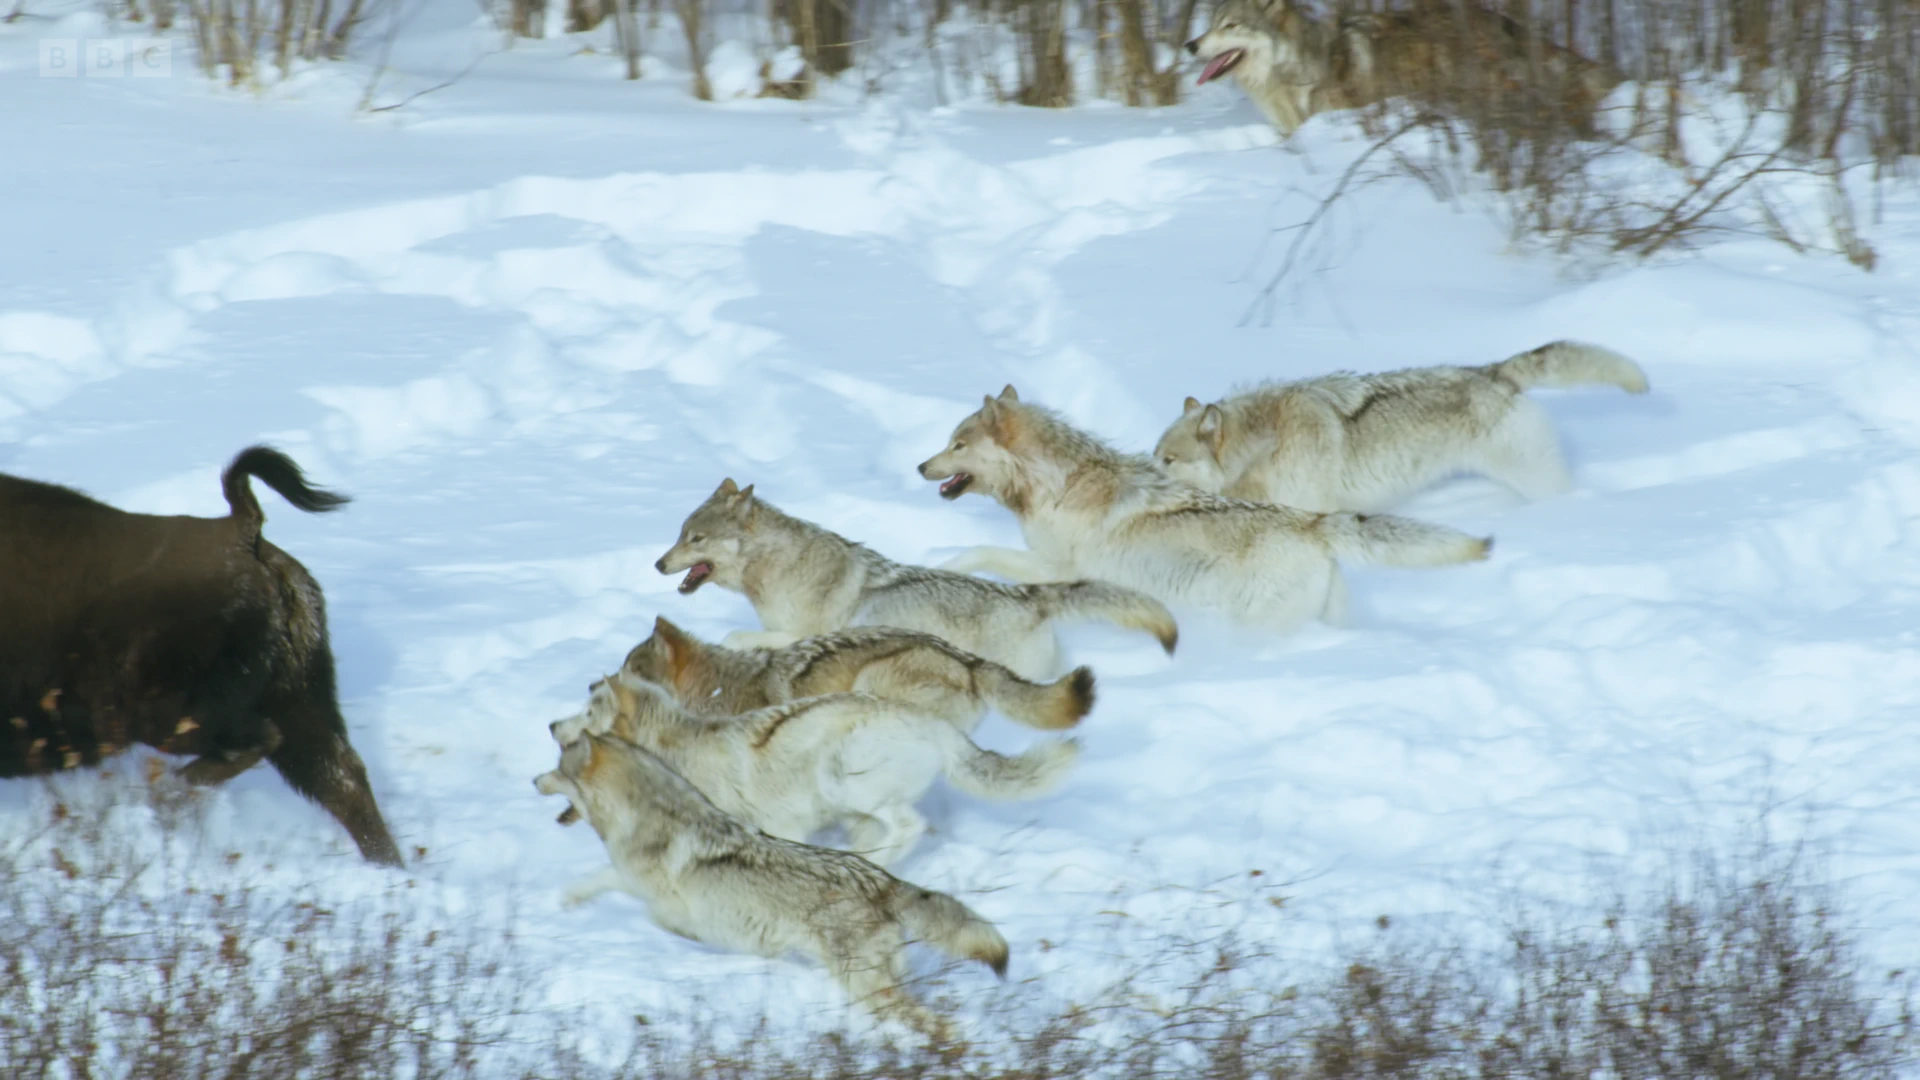 Northwestern wolf (Canis lupus occidentalis) as shown in Frozen Planet II - Frozen Lands